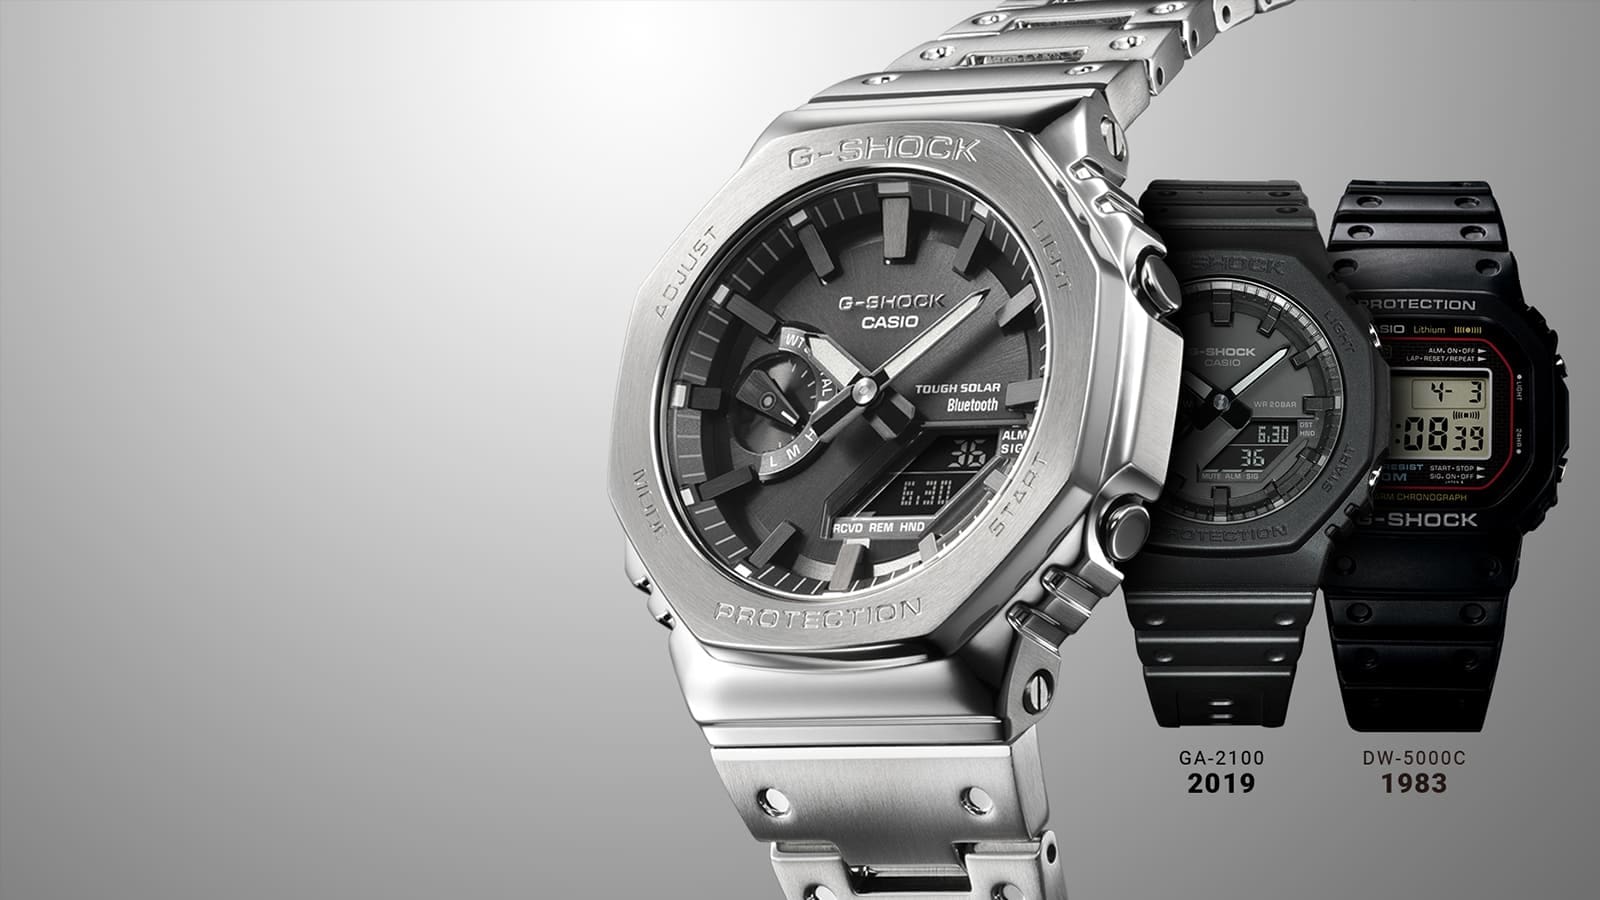 Timeline of older watch models,  1983 DW5000C, 2019 GA-2100, ending with 2022 full metal GM-B2100